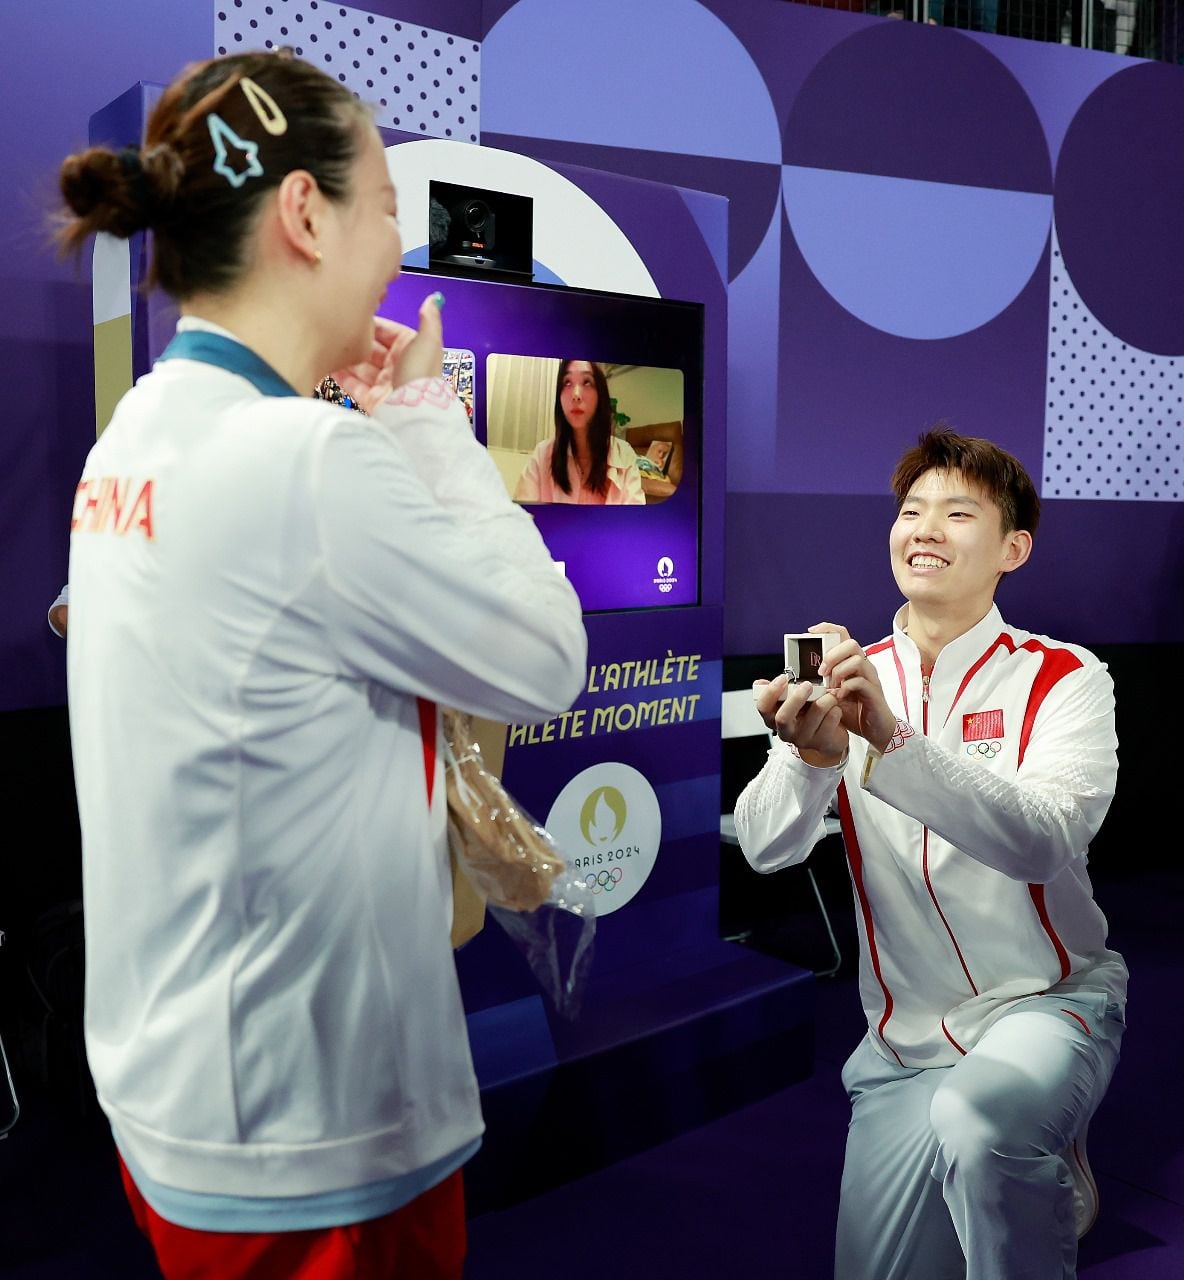 La deportista china aceptó casarse. (Foto: Xinhua News Agency)